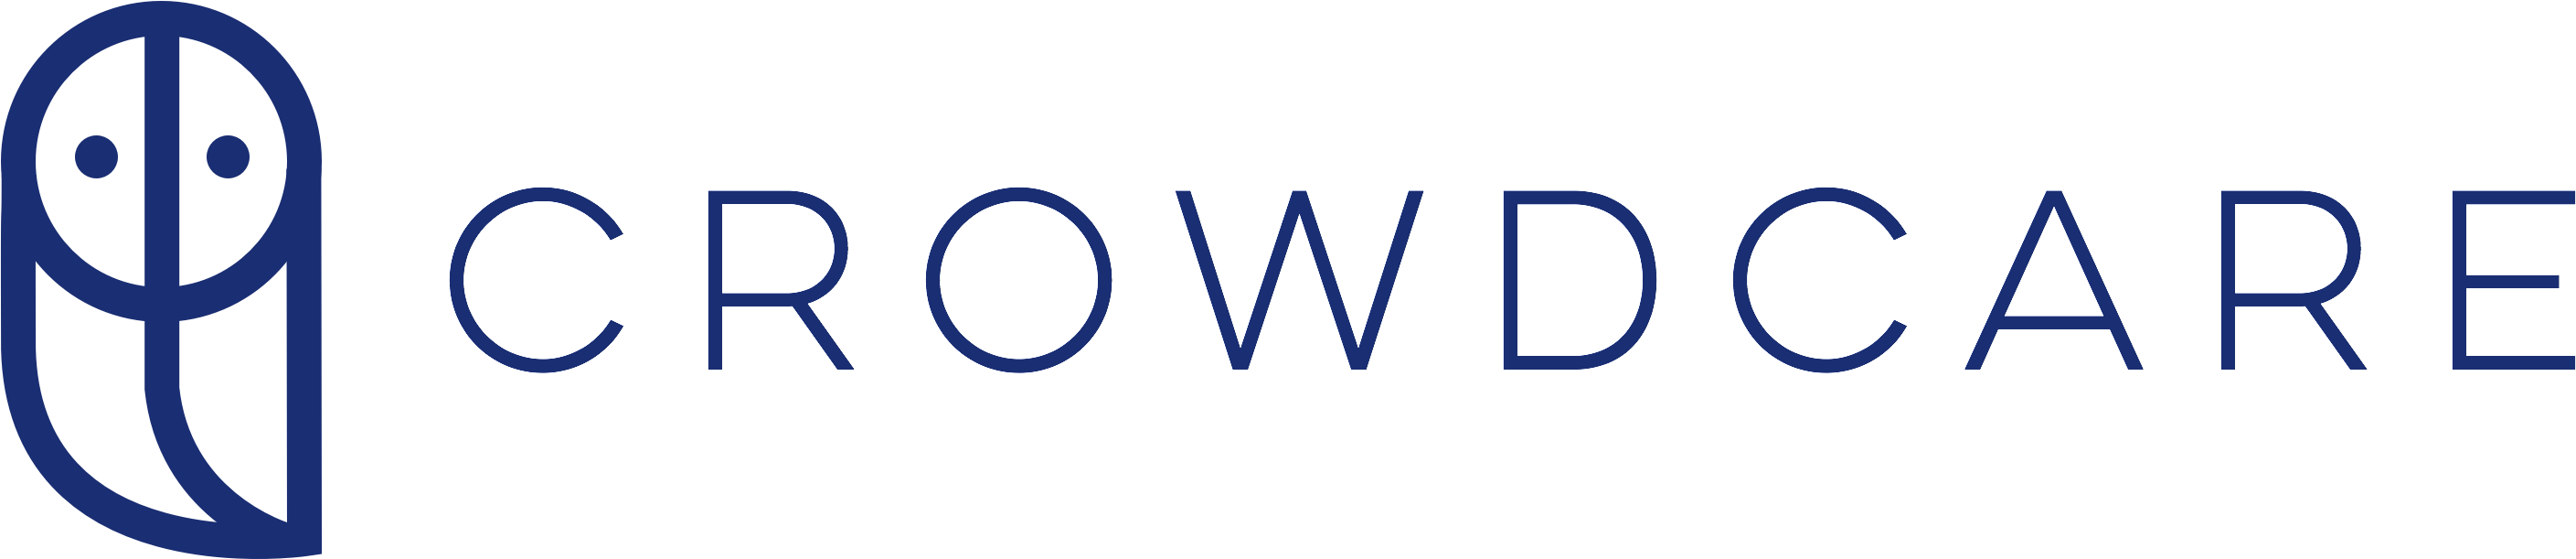 CrowdCare logo